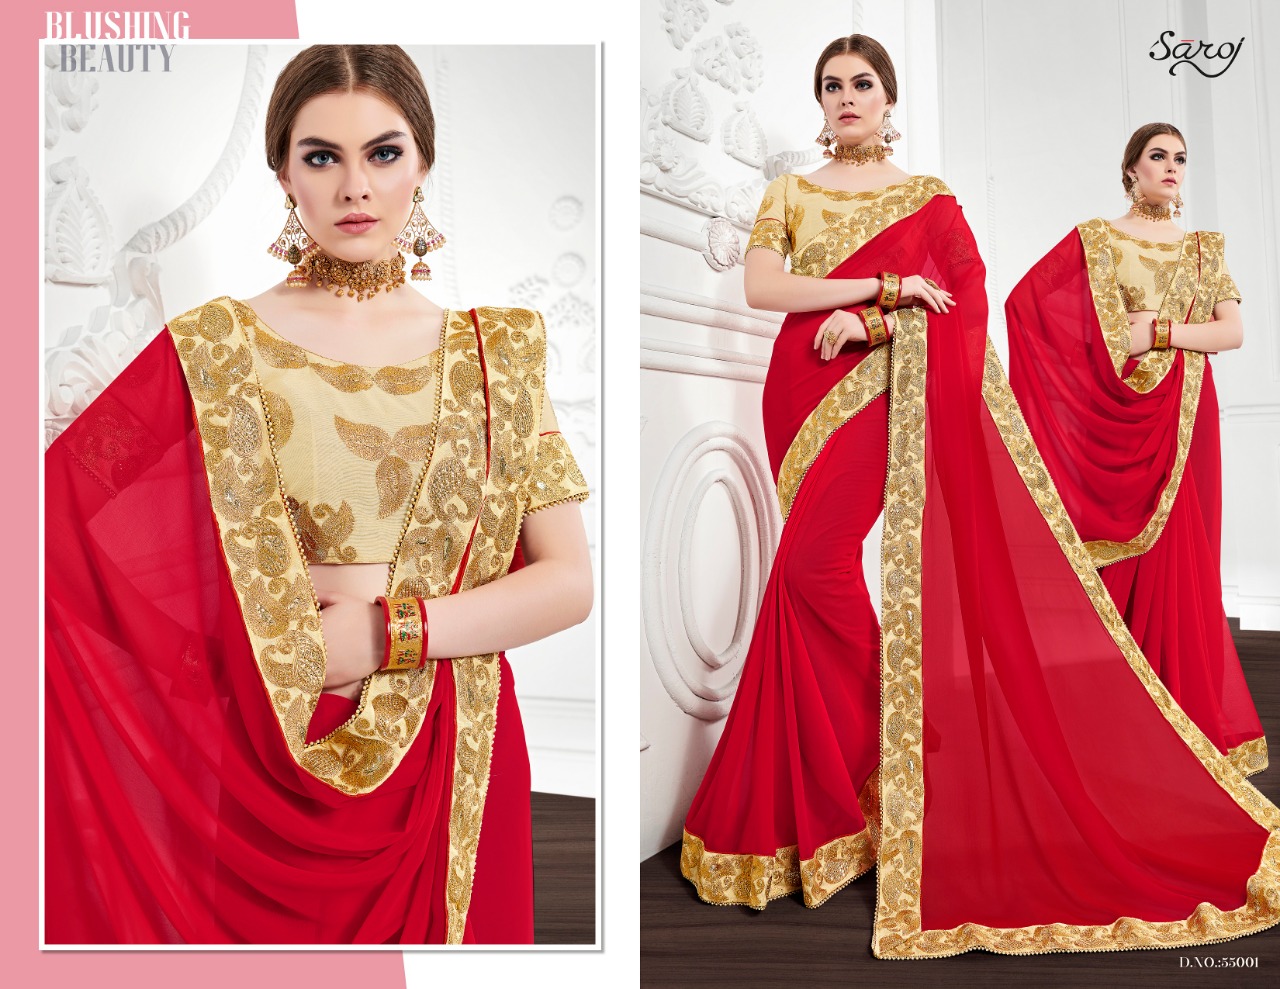 Saroj Saree Indian Fashion 55001